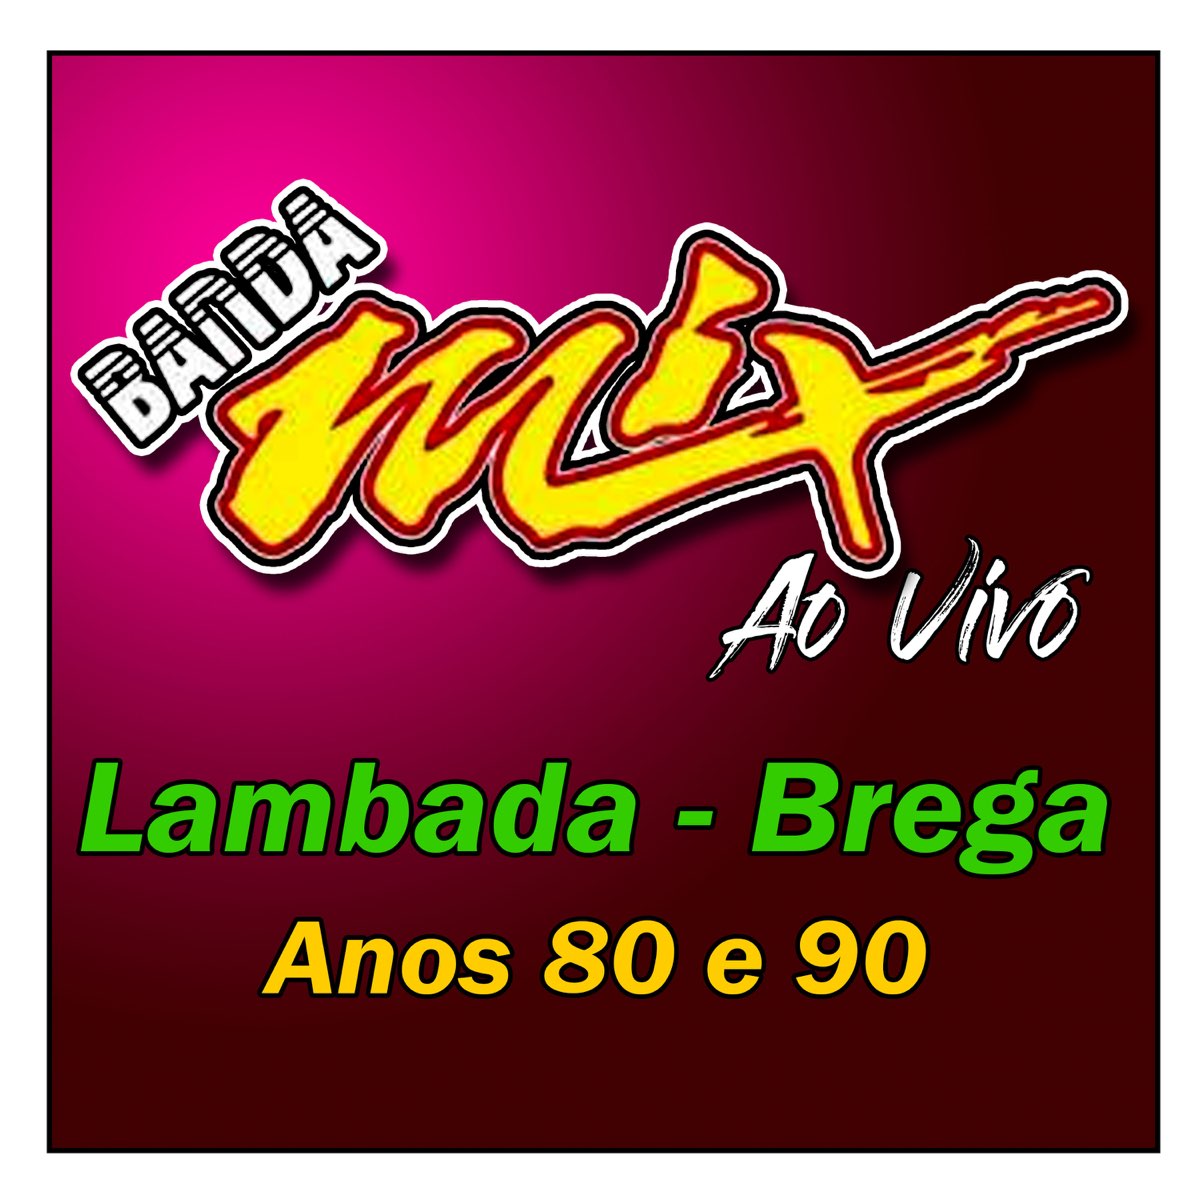 LAMBADA - BREGA ANOS 80 E 90 - Album by BANDA MIX - Apple Music